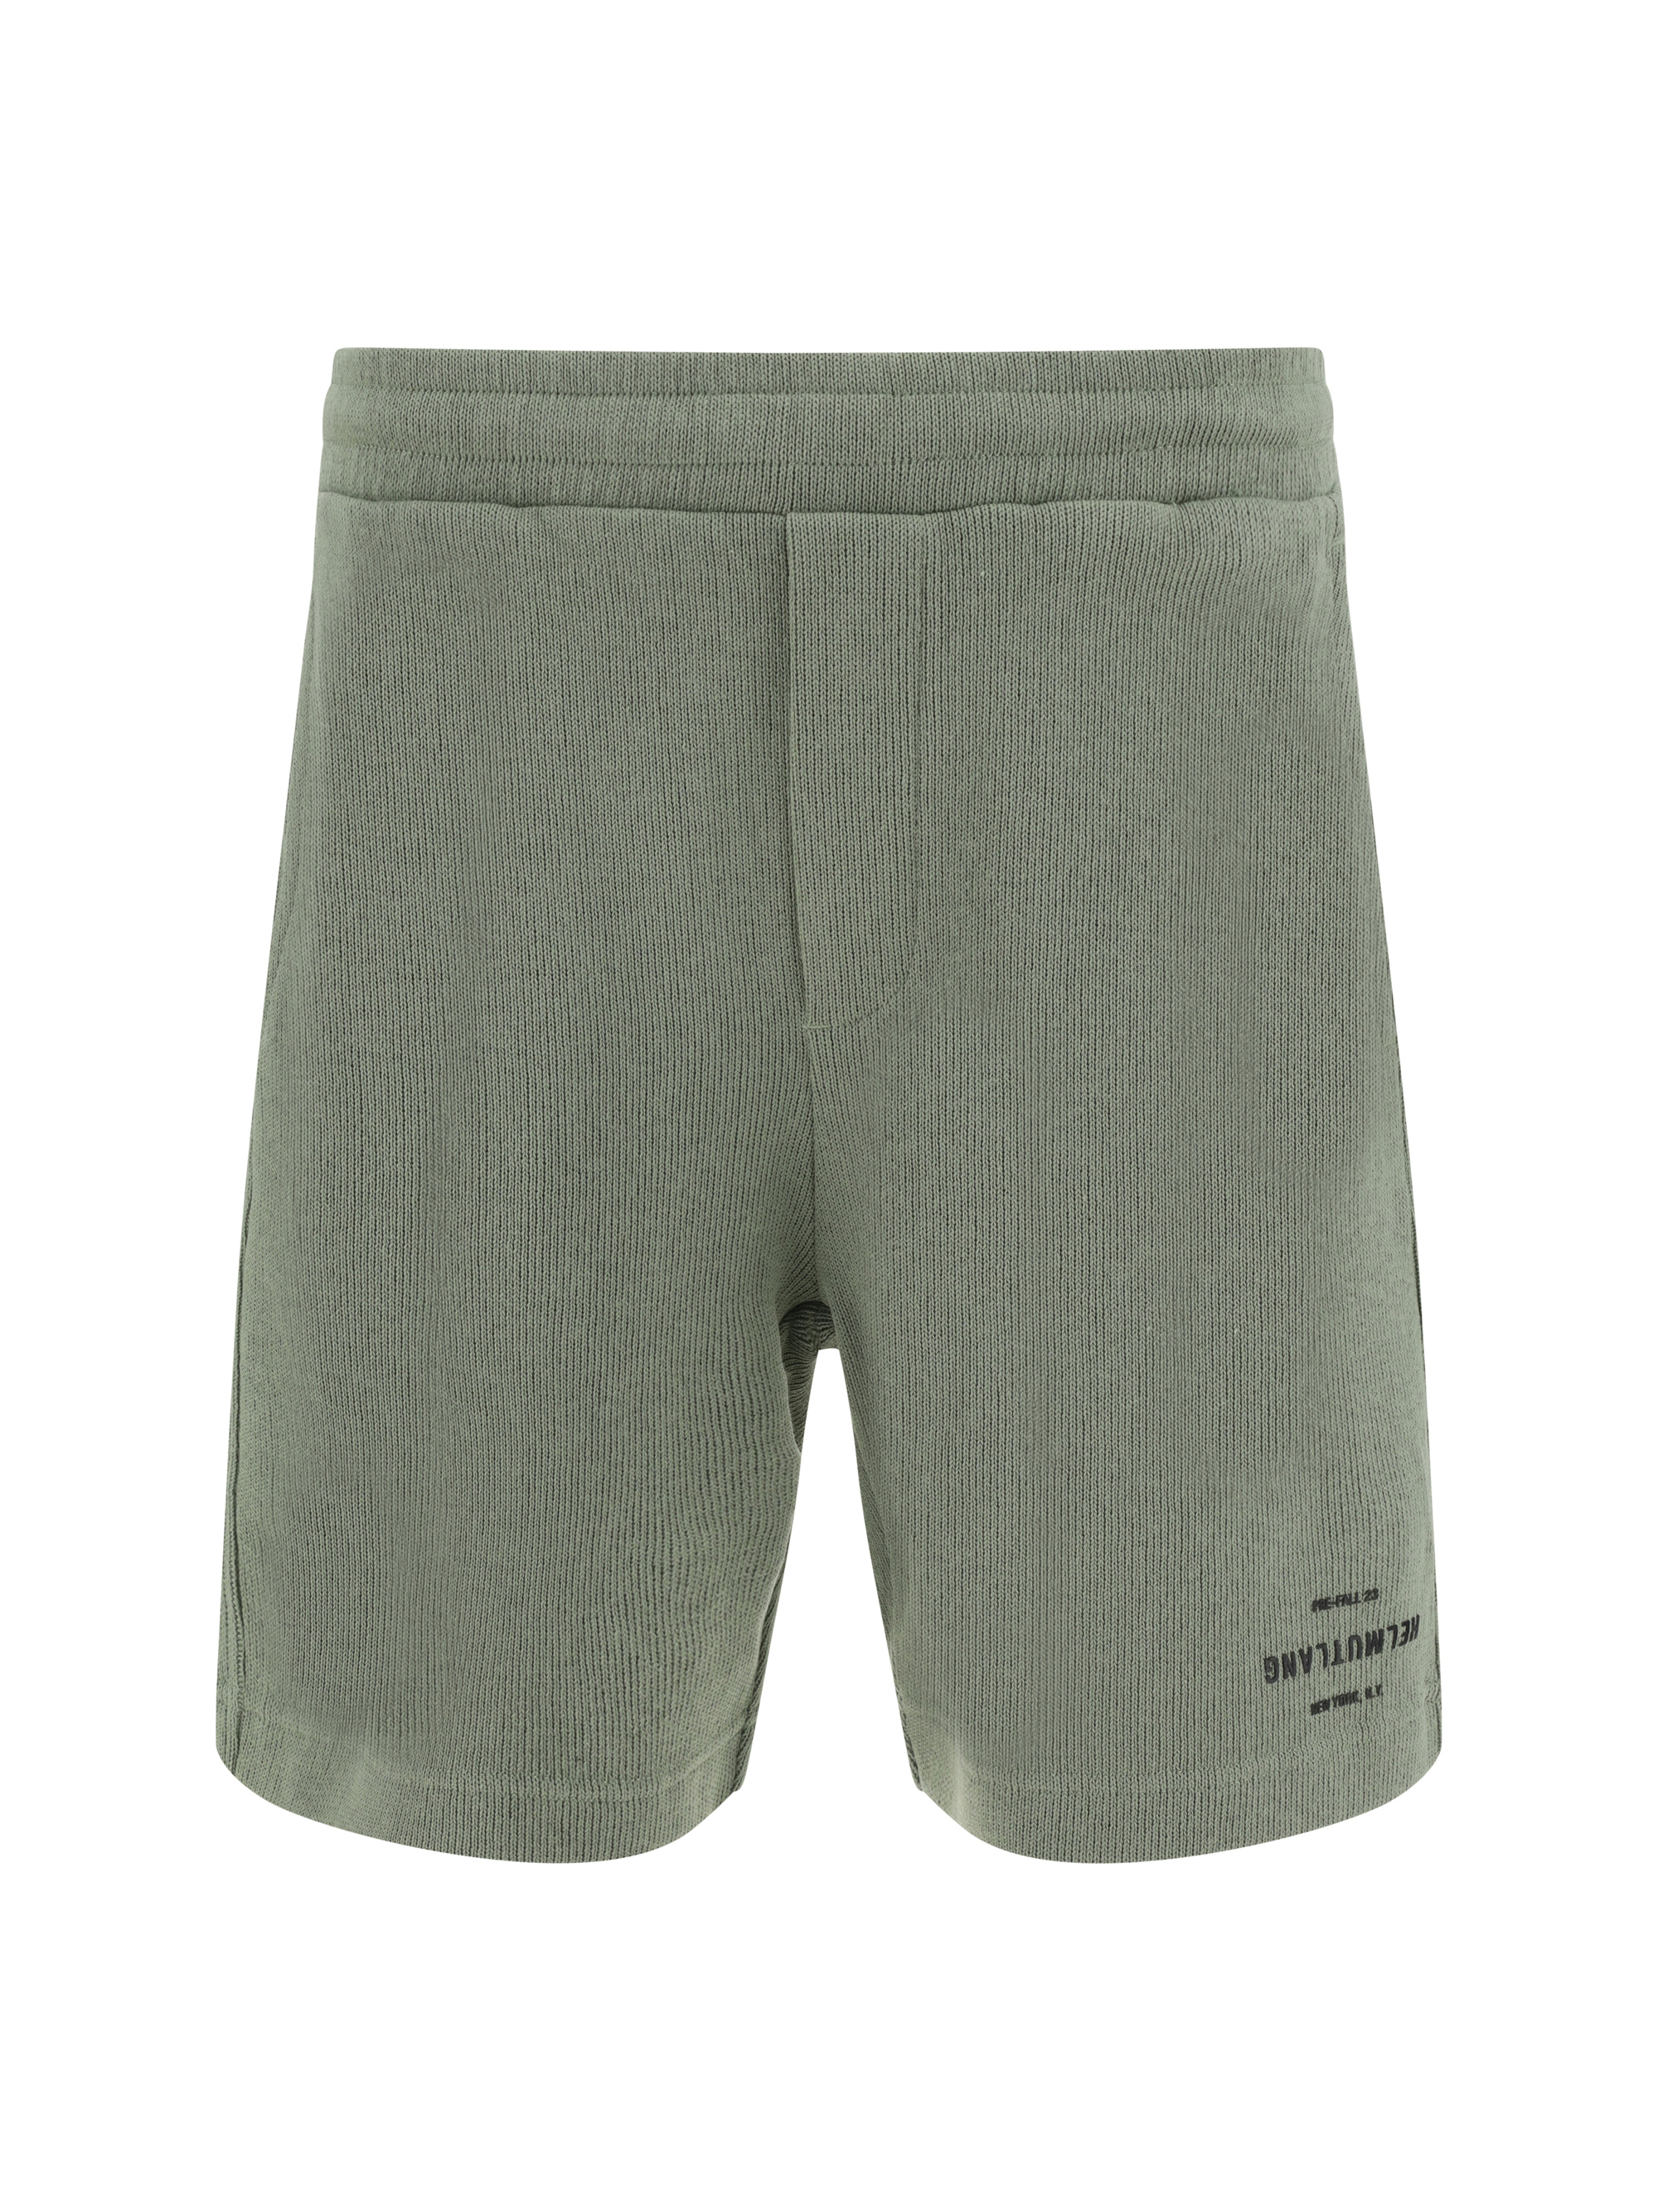 helmut lang - shorts